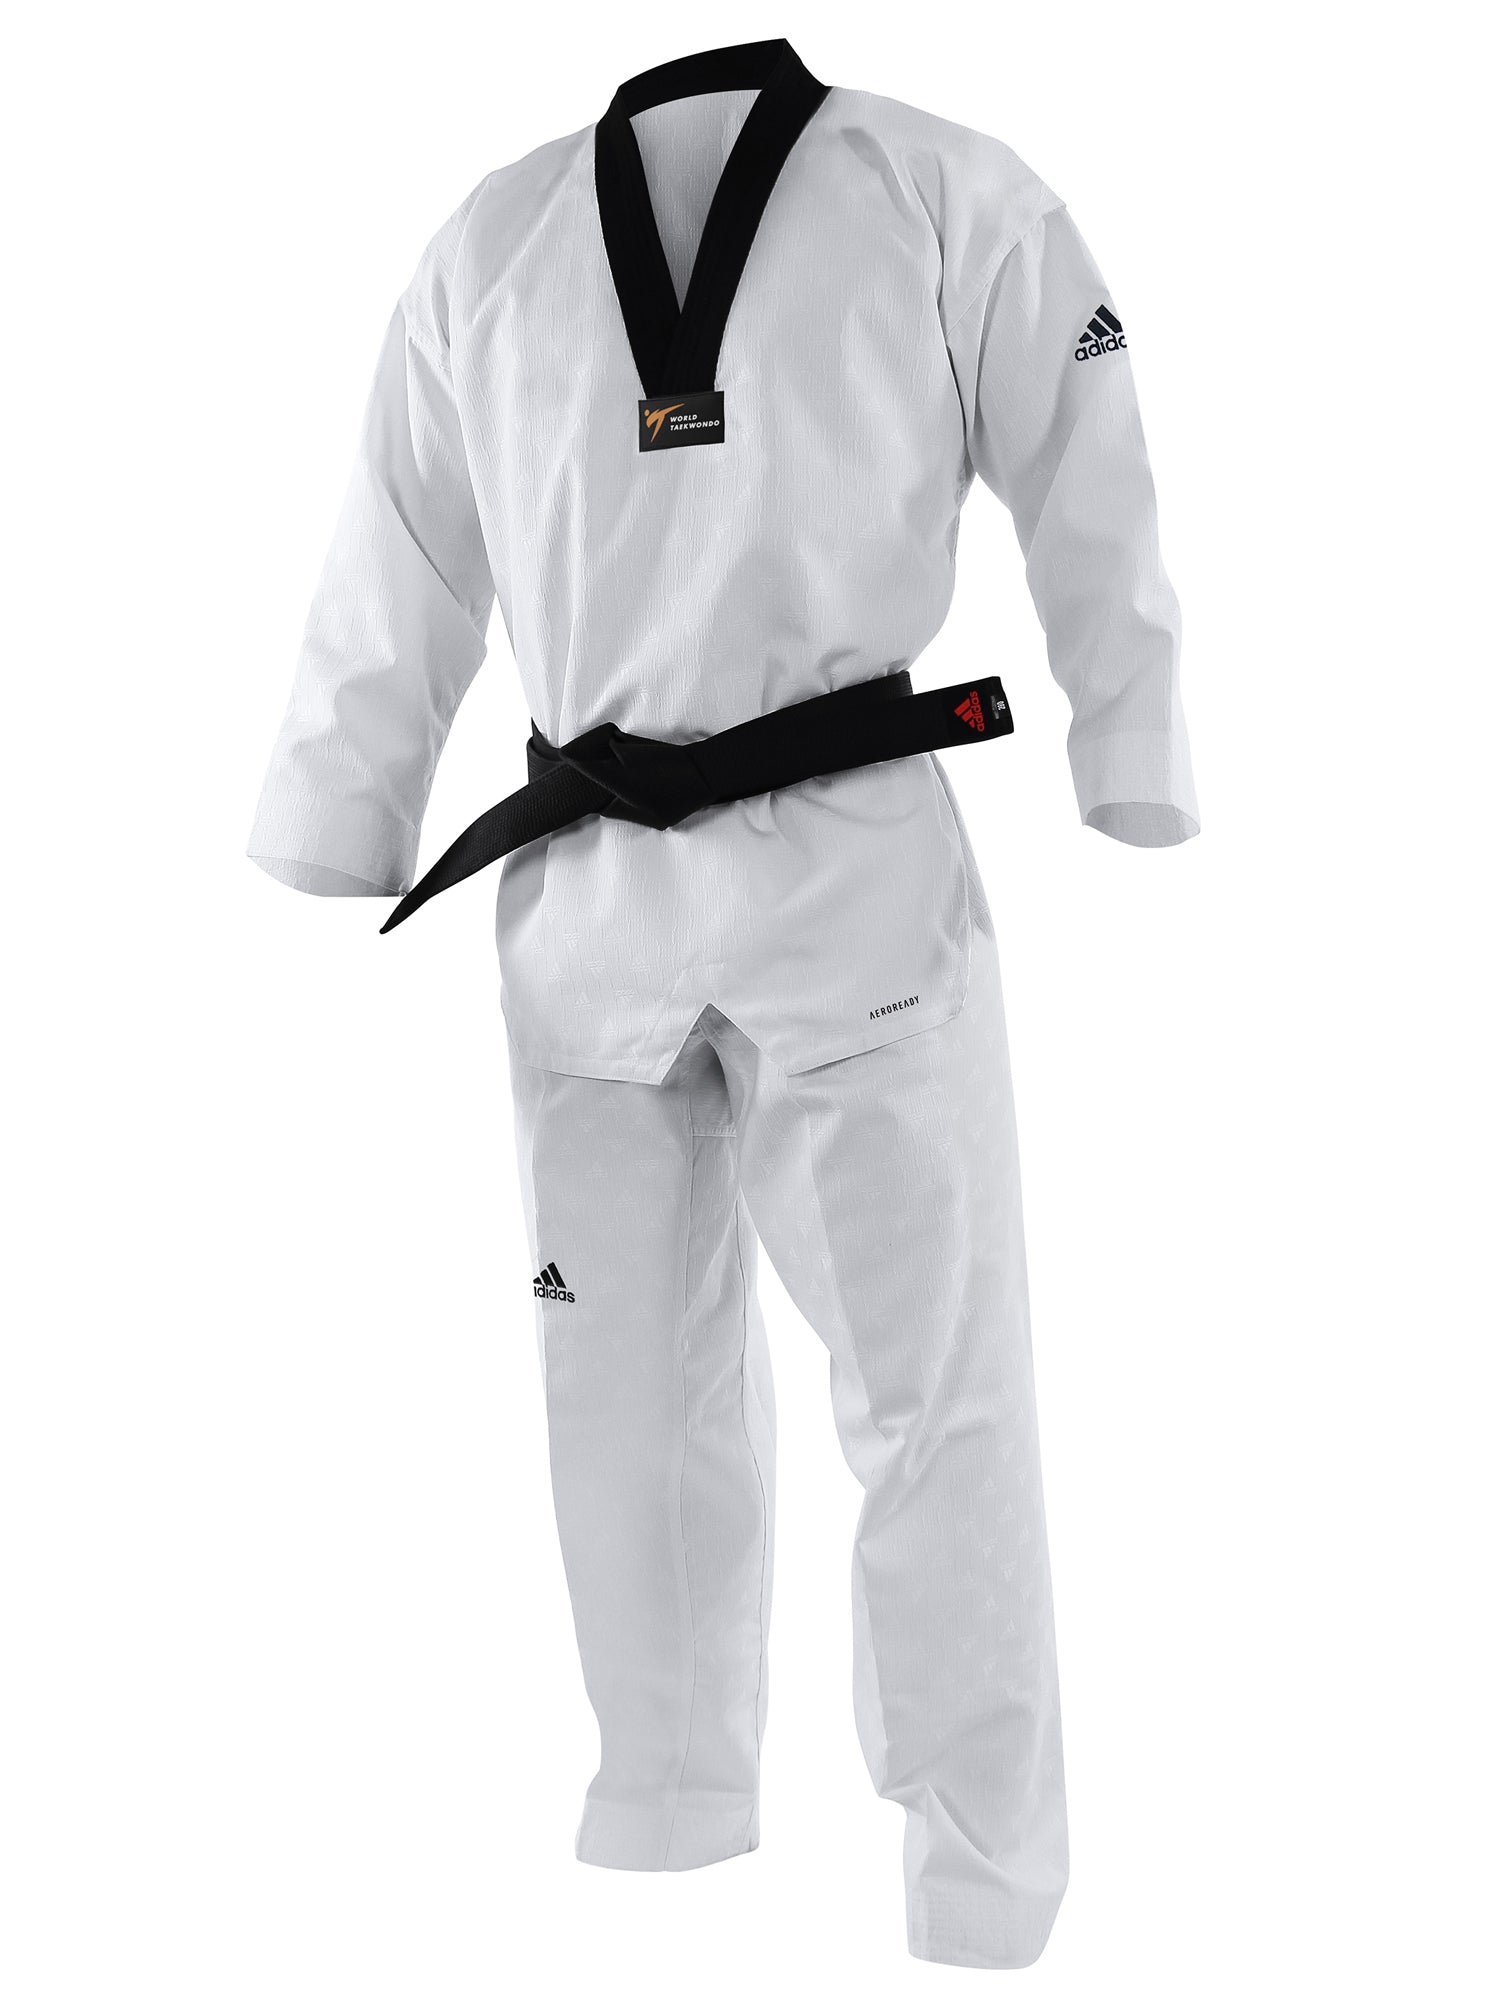 Aprender acerca 127+ imagen adidas taekwondo gear - br.thptnvk.edu.vn